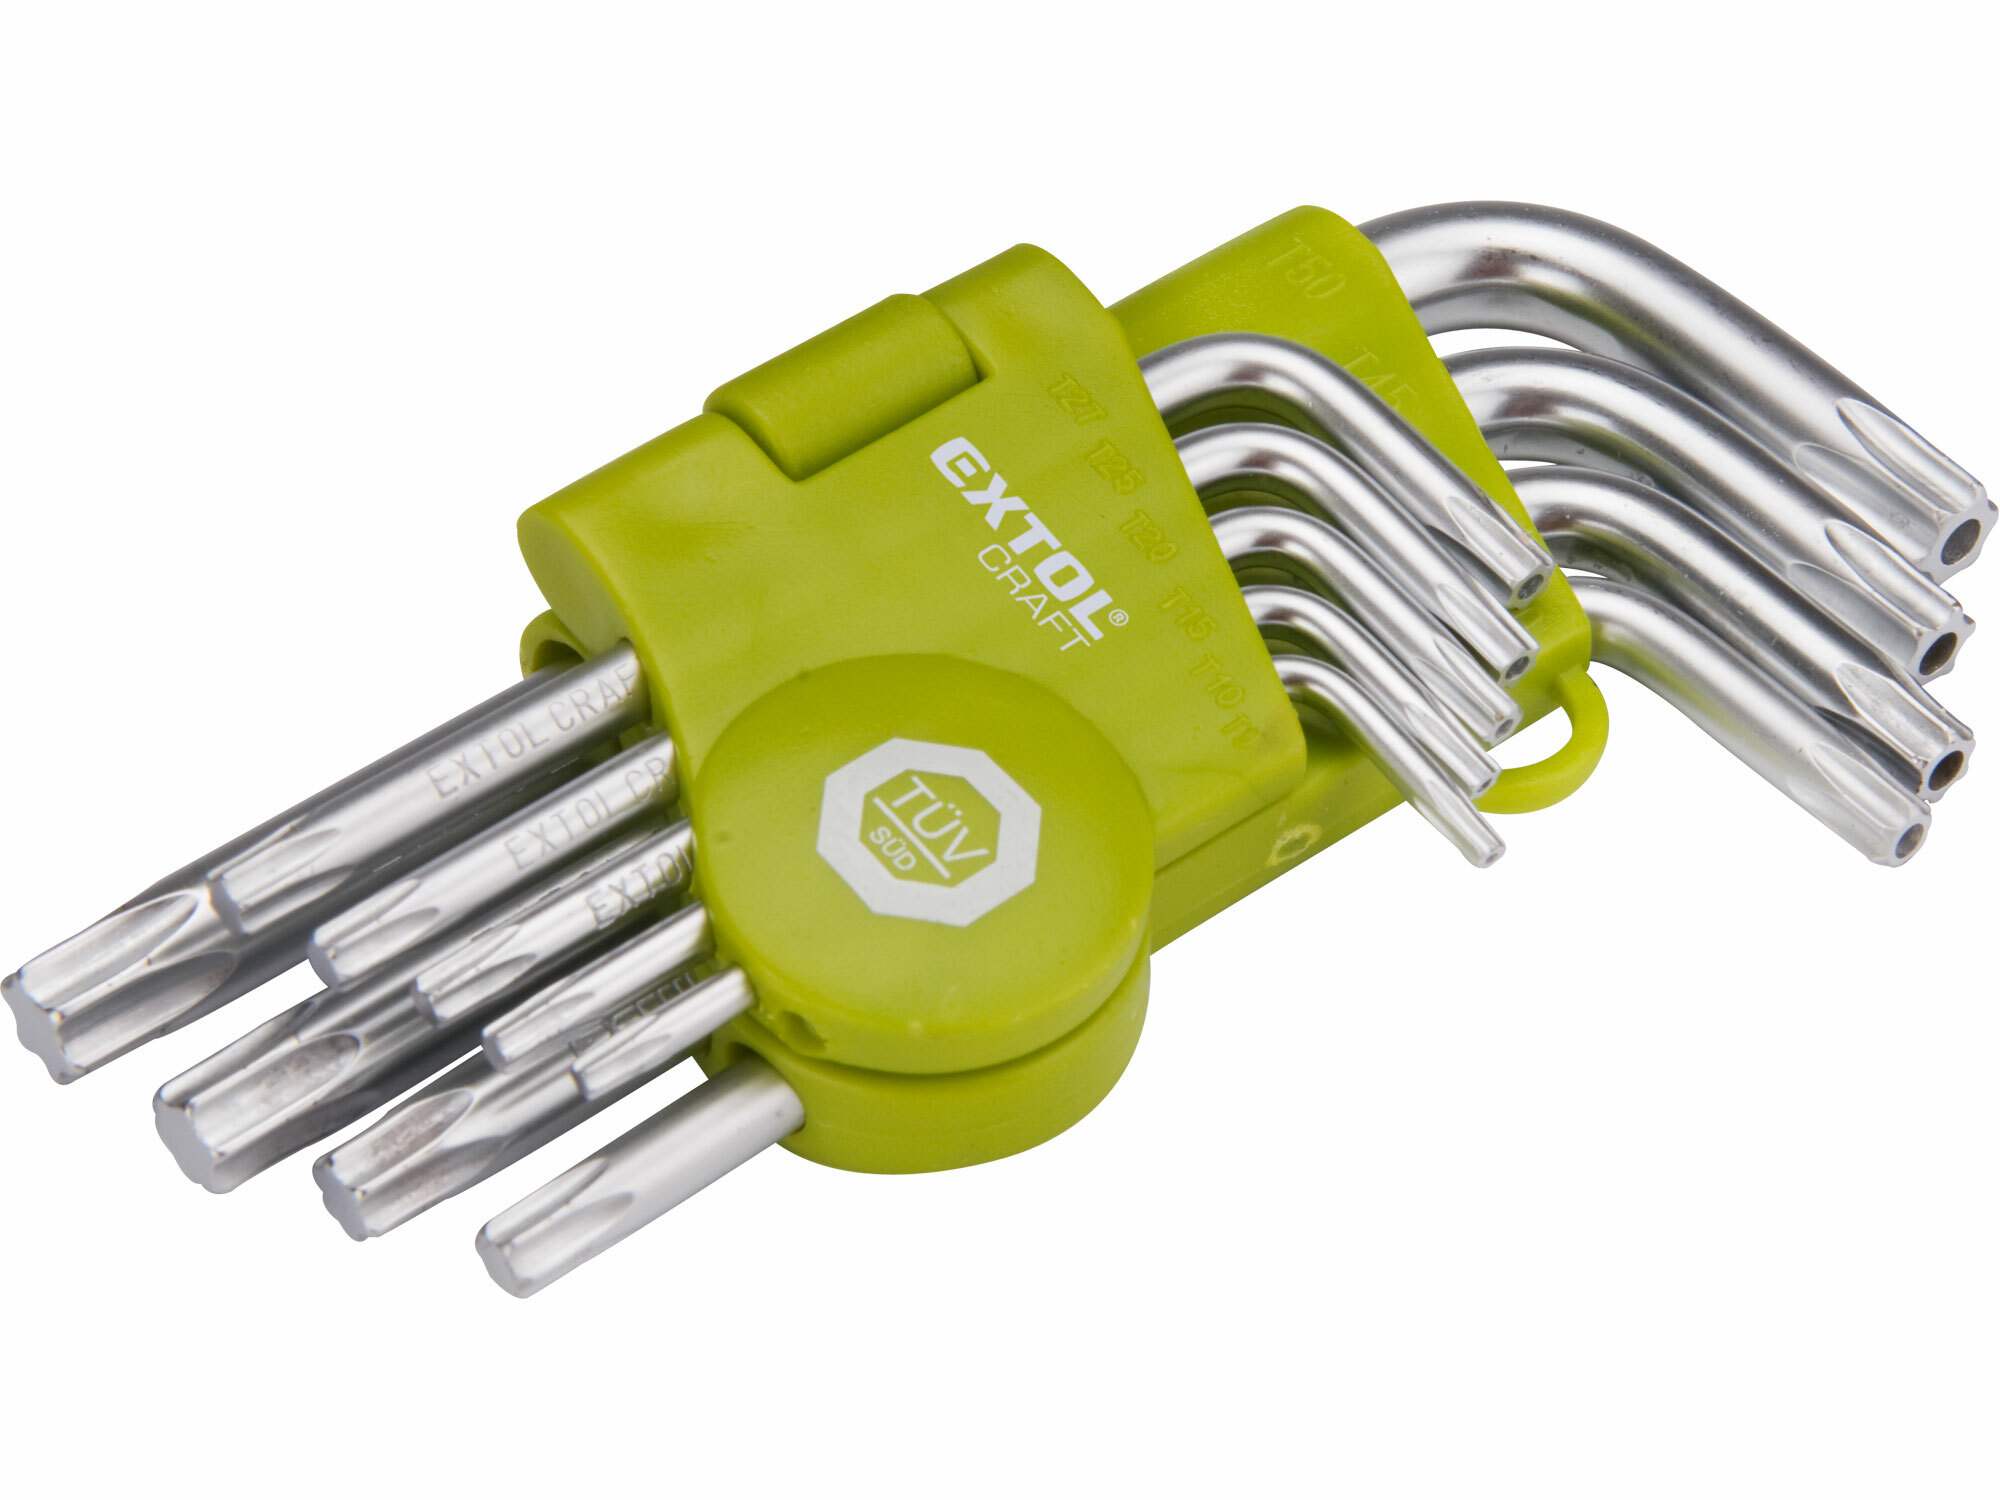 L-kľúče TORX krátke, 9-dielna sada, EXTOL CRAFT